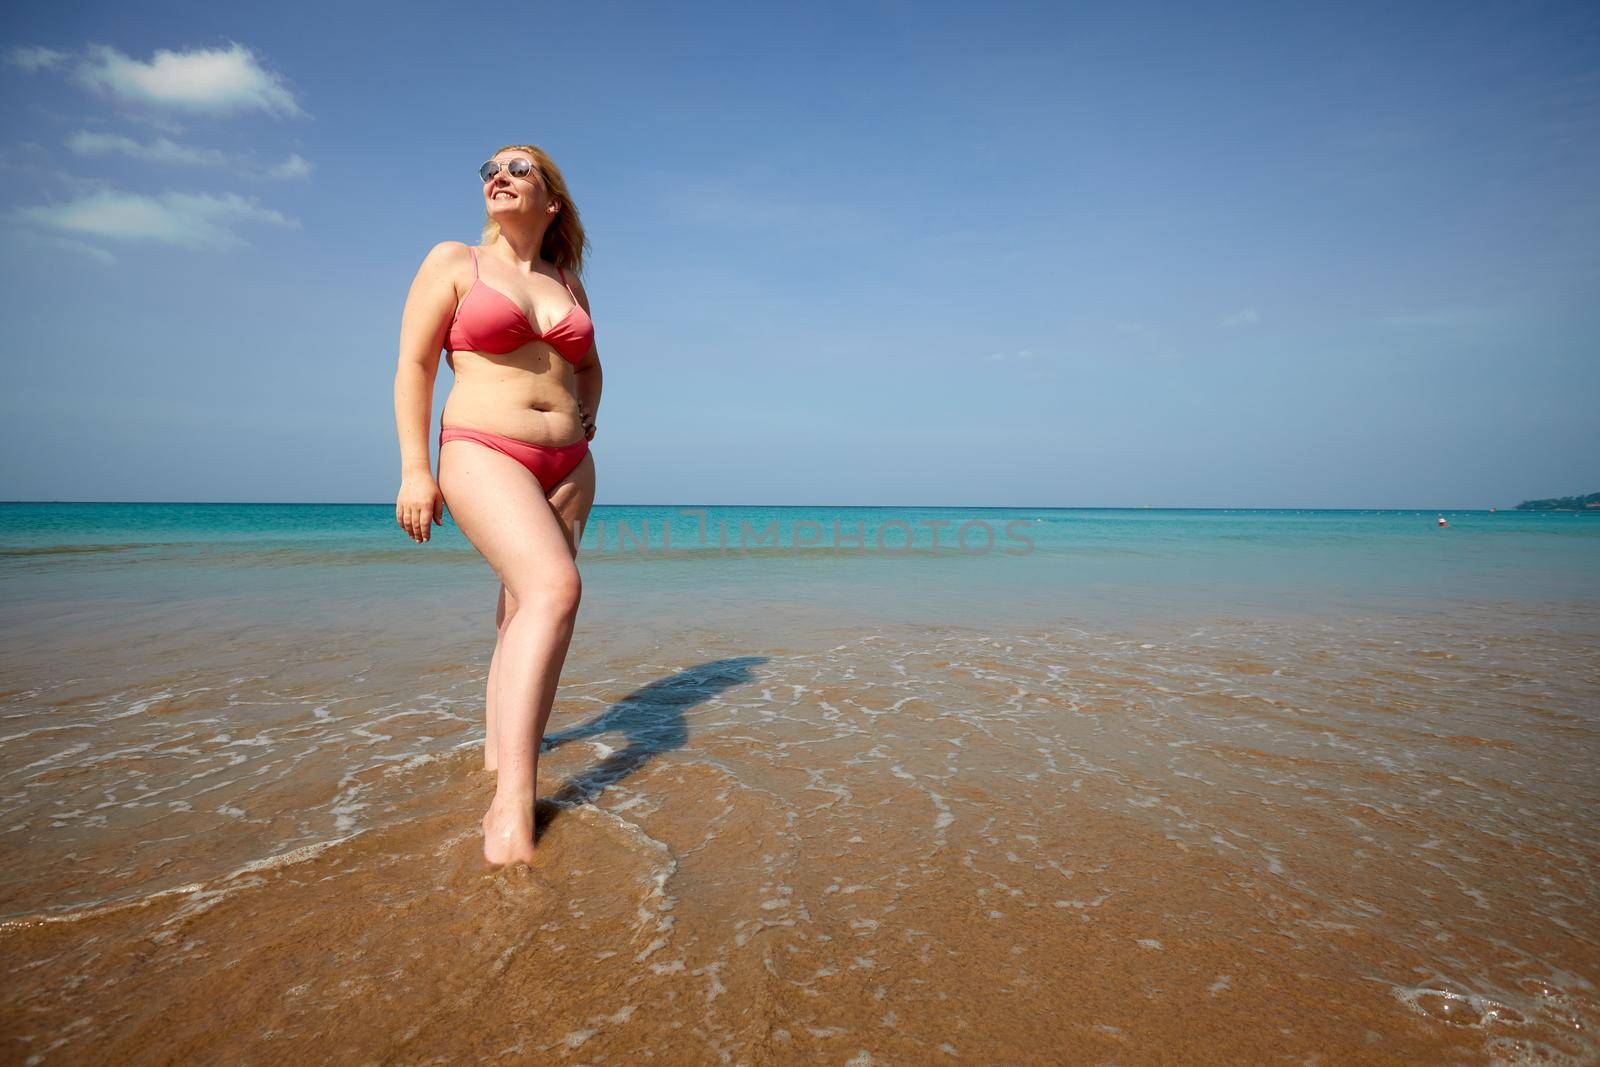 Plus size female tourist enjoying vacation on sandy seacoast by Demkat